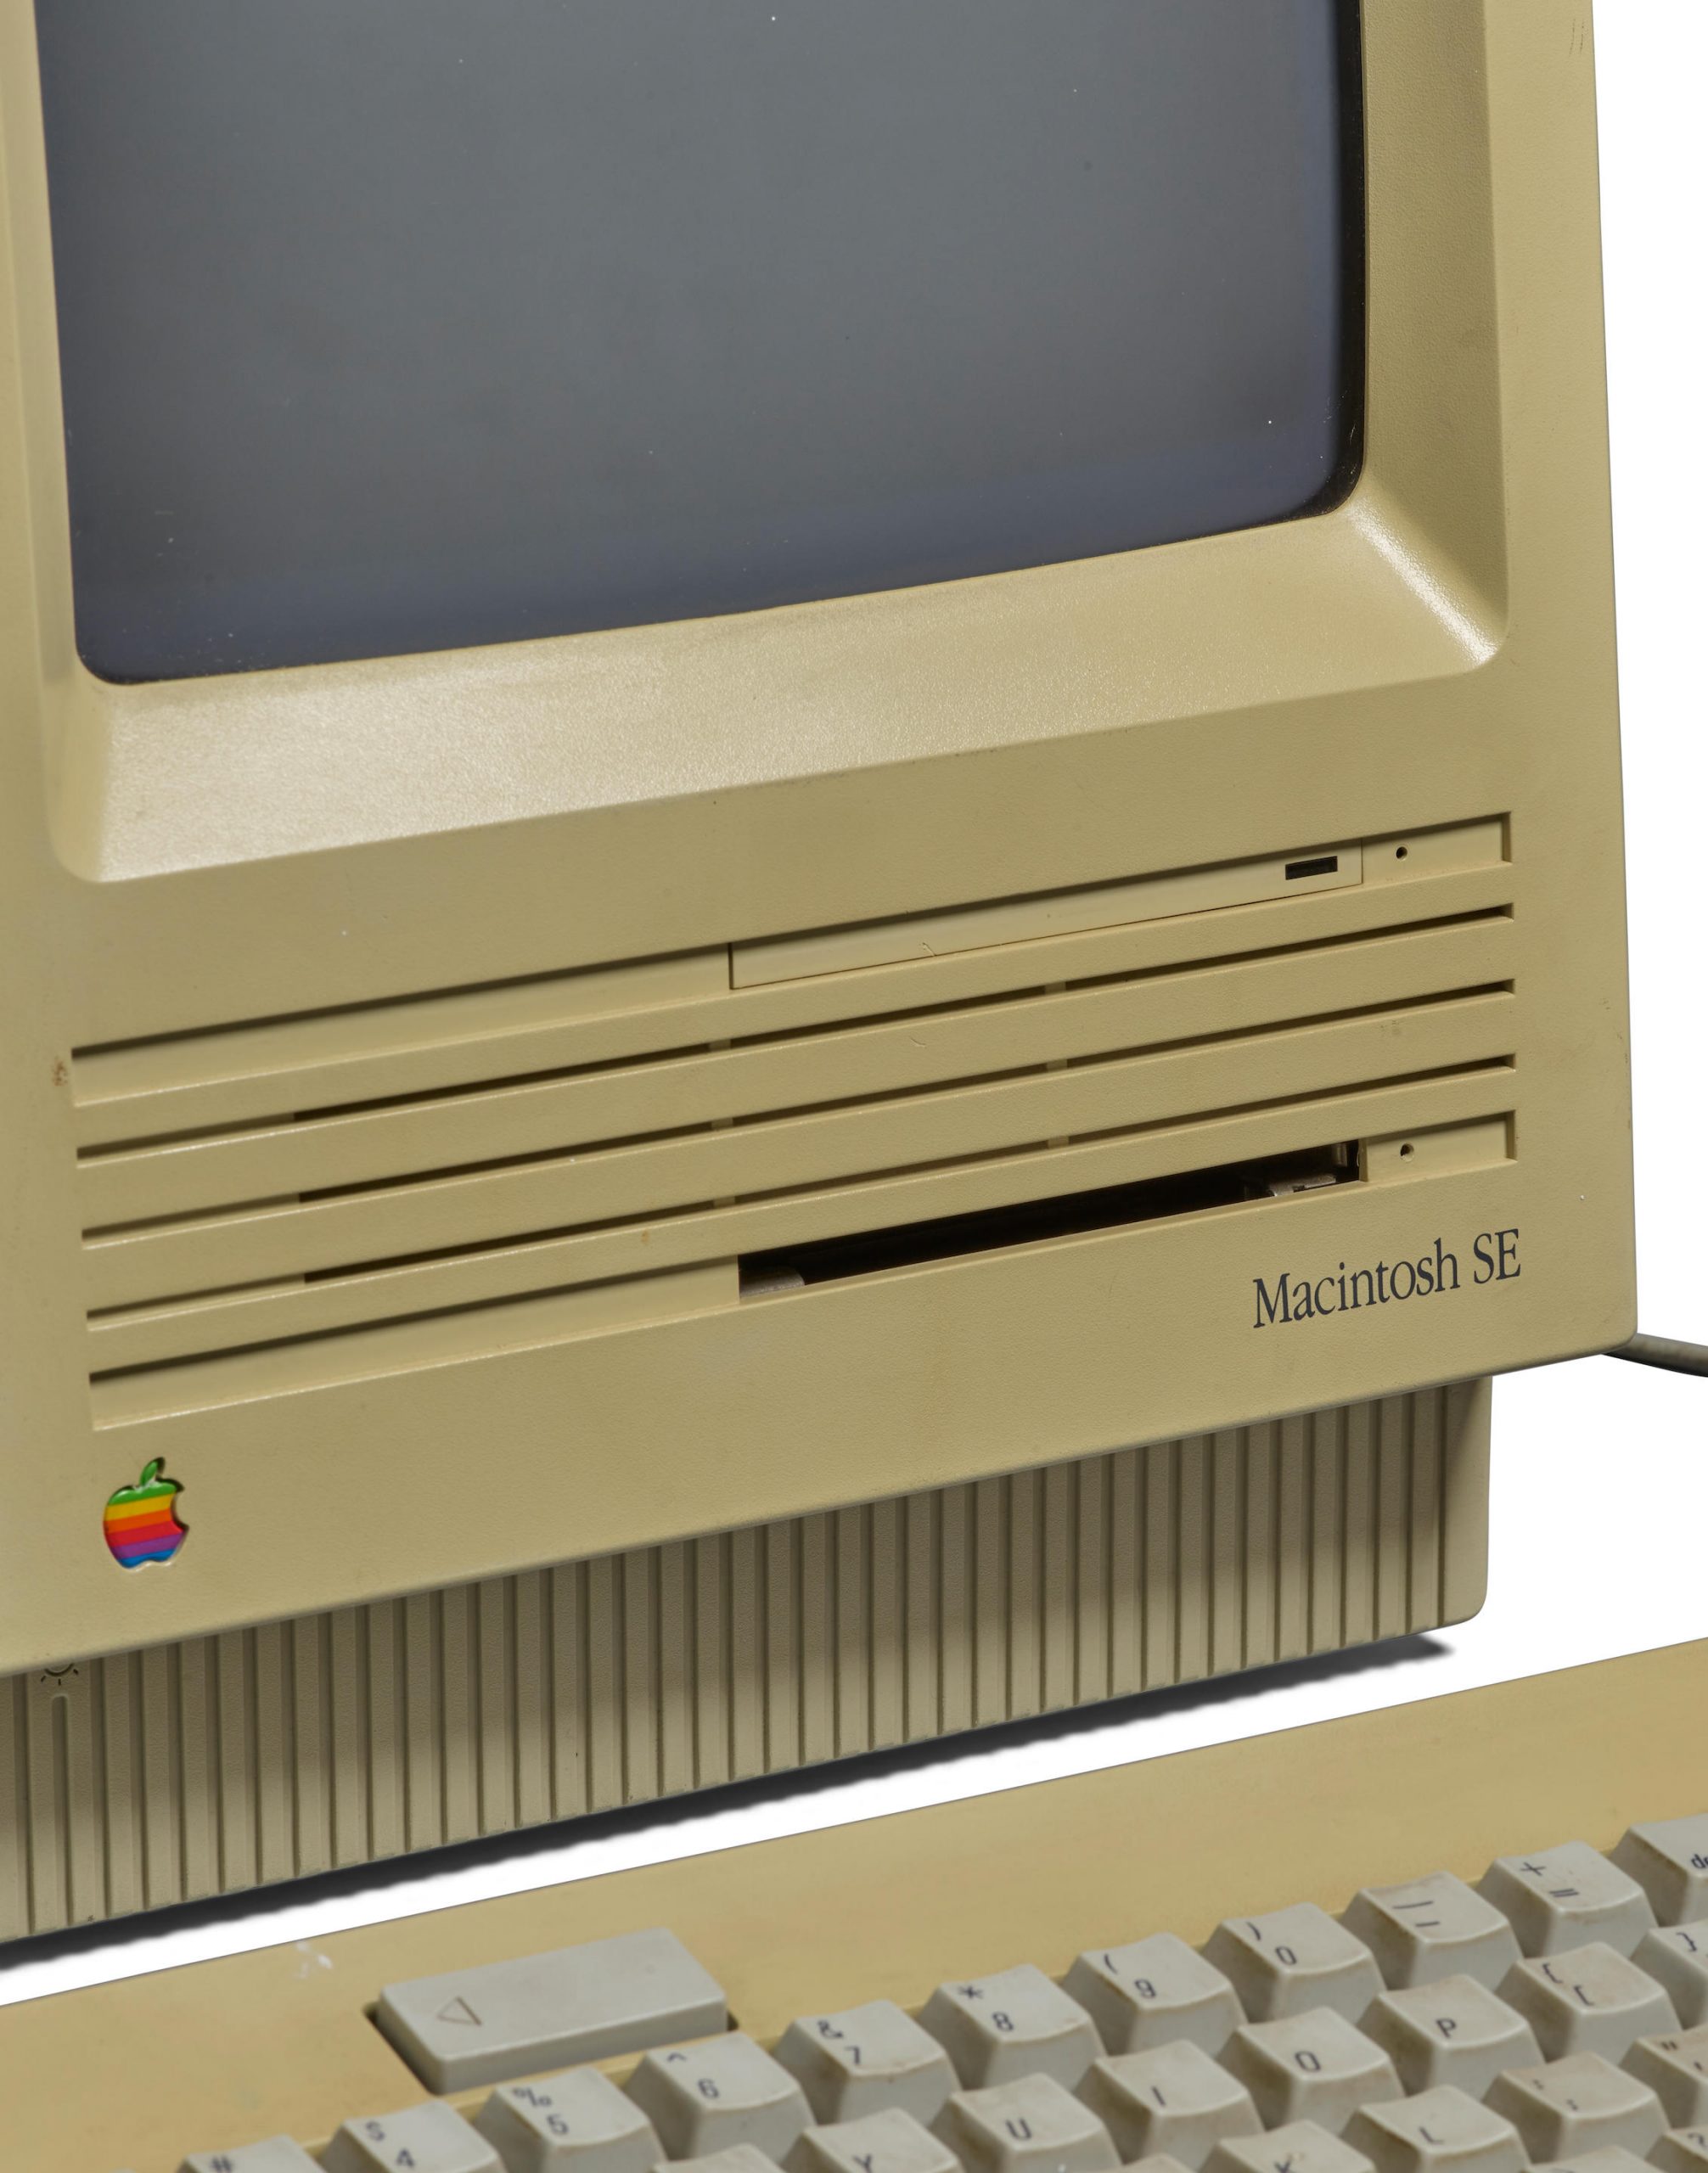 Компьютер Macintosh SE Стива Джобса выставлен на аукцион